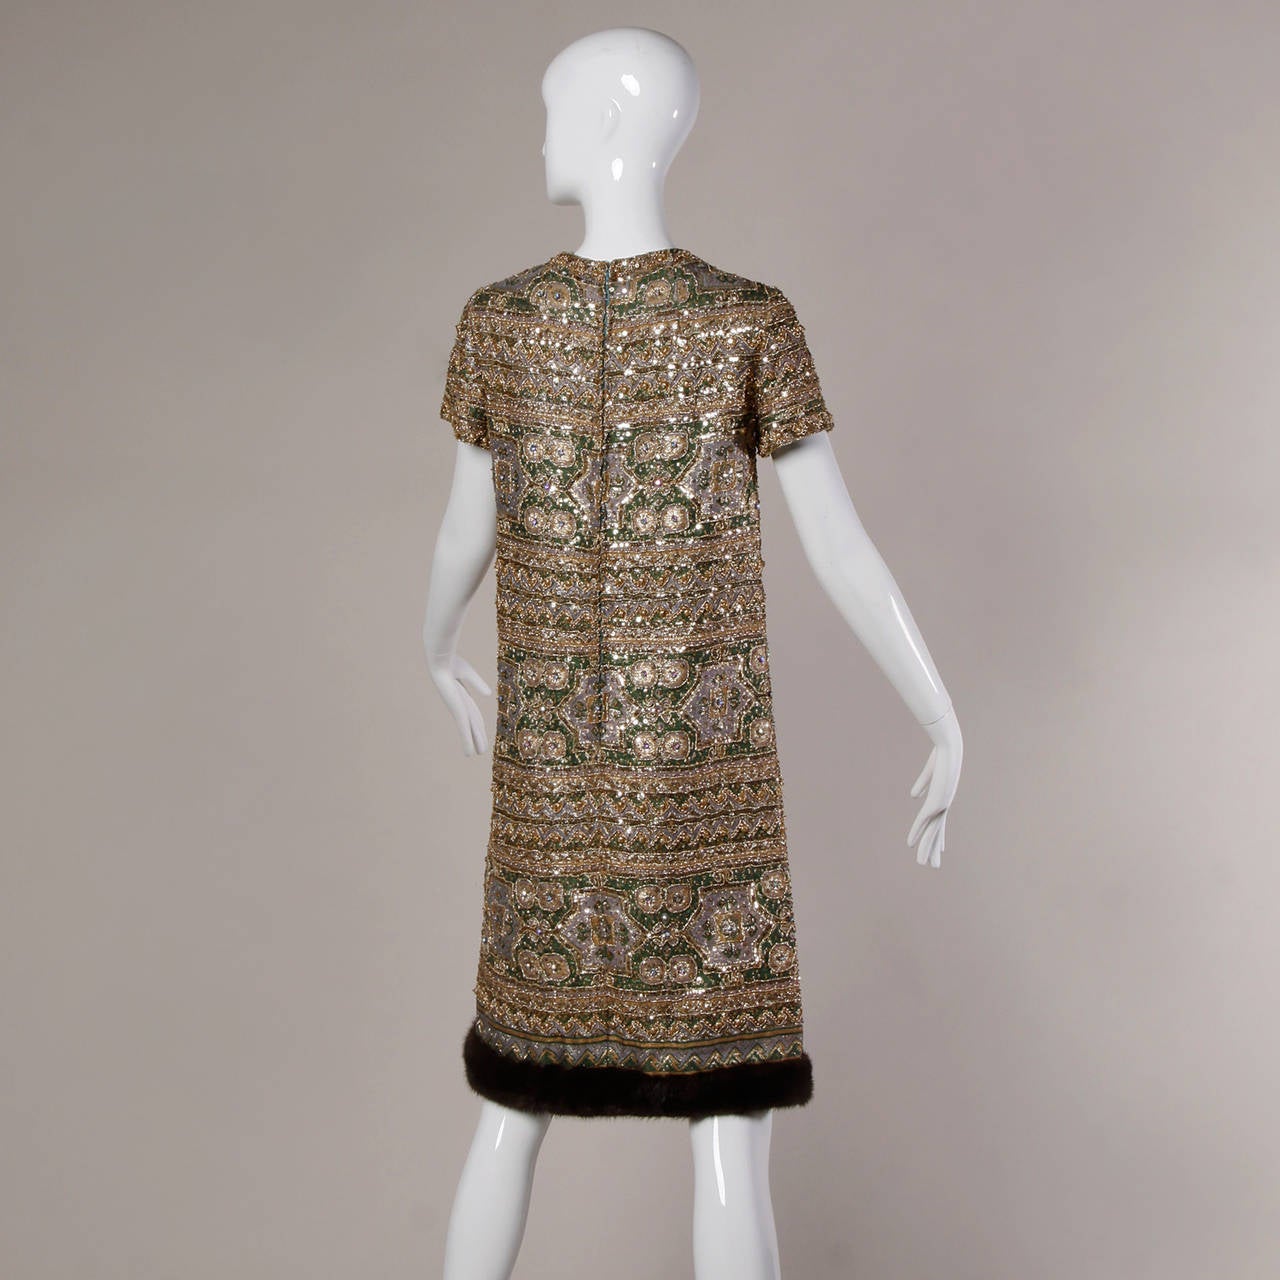 Women's 1960s Metallic Embellished Shift Dress with Mink Fur Trim